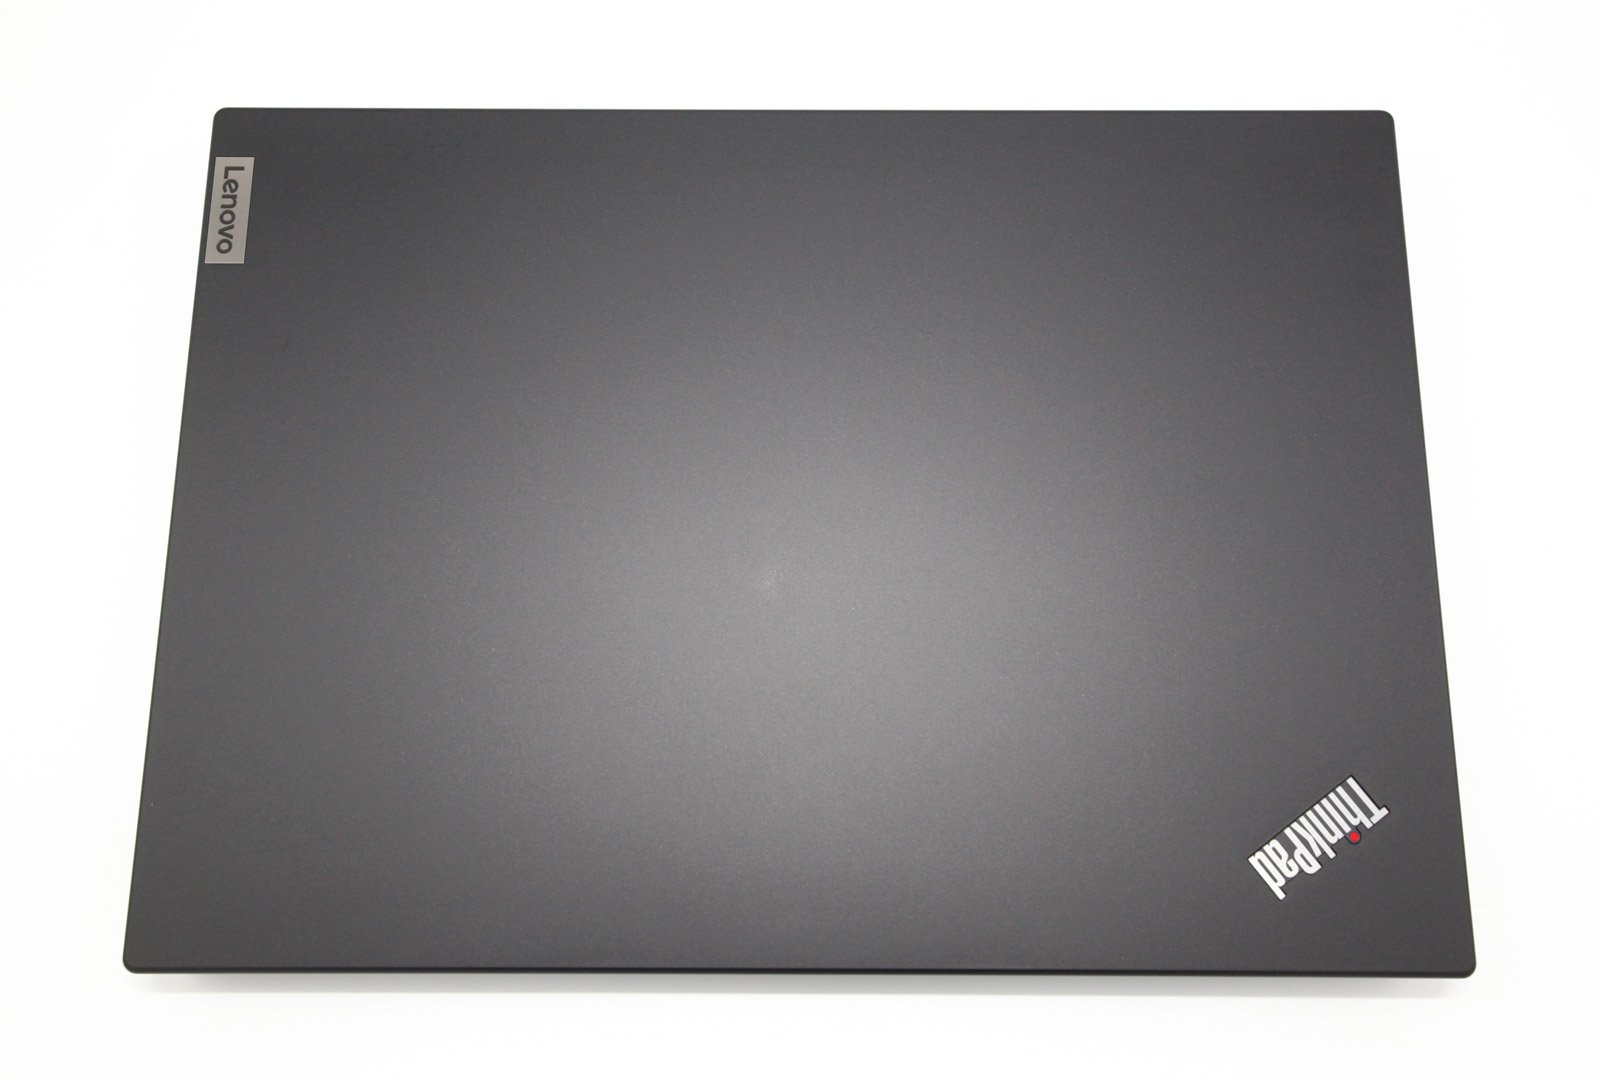 Lenovo Thinkpad L14: Ryzen 7 4750U 8-Cores, 512GB SSD, 16GB RAM, Warranty - CruiseTech